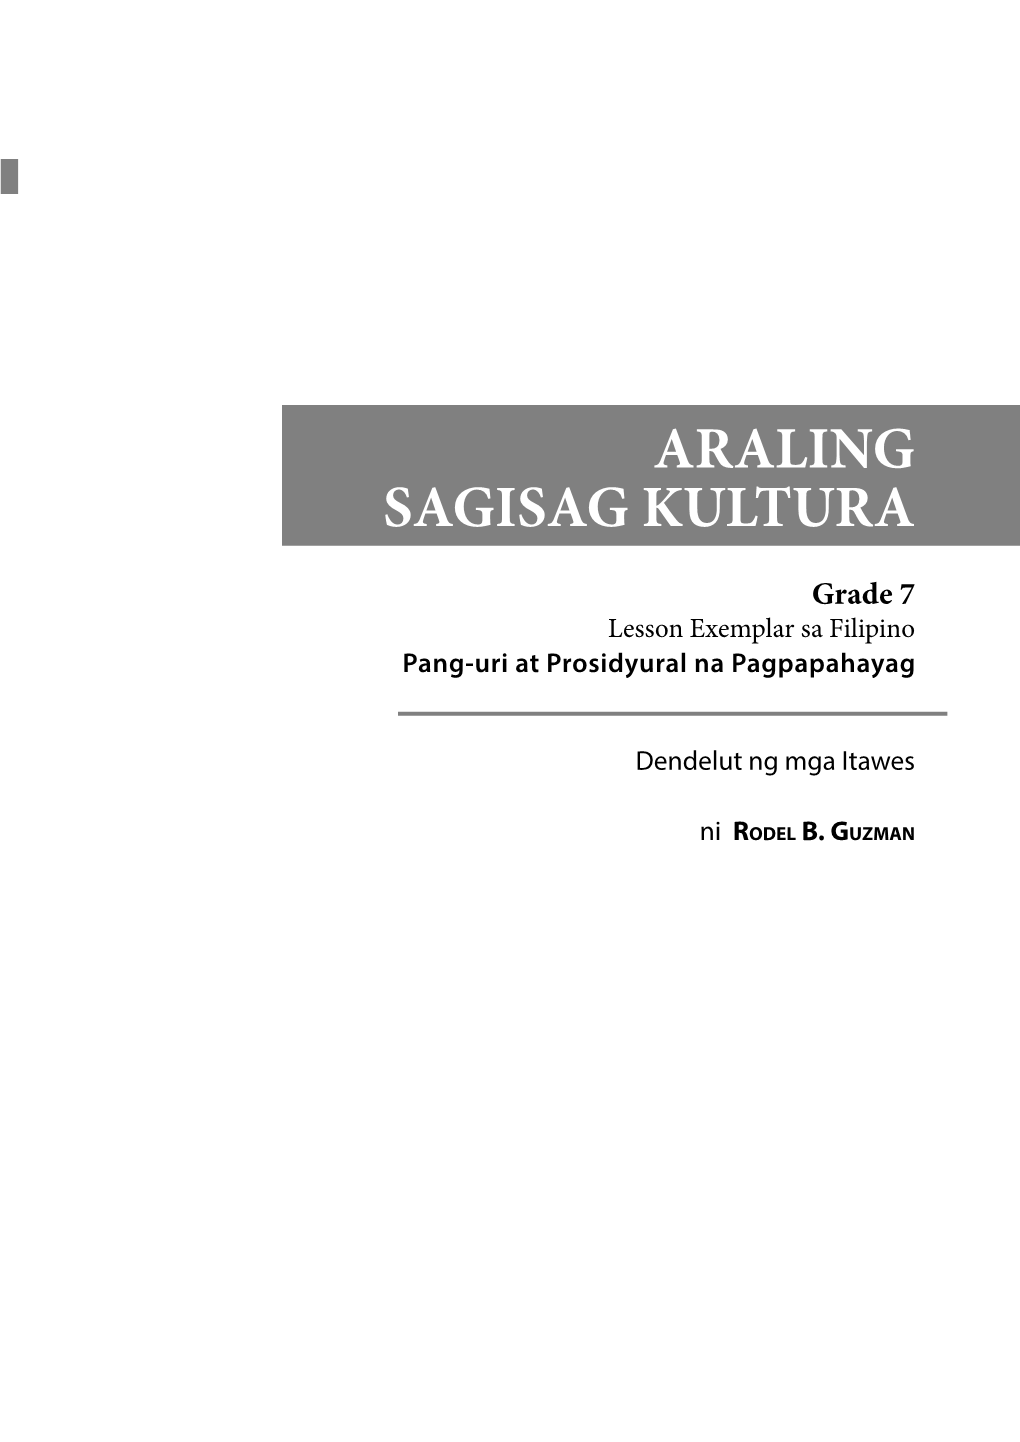 Revised Araling Sagisag Kultura Oct 27.Indd